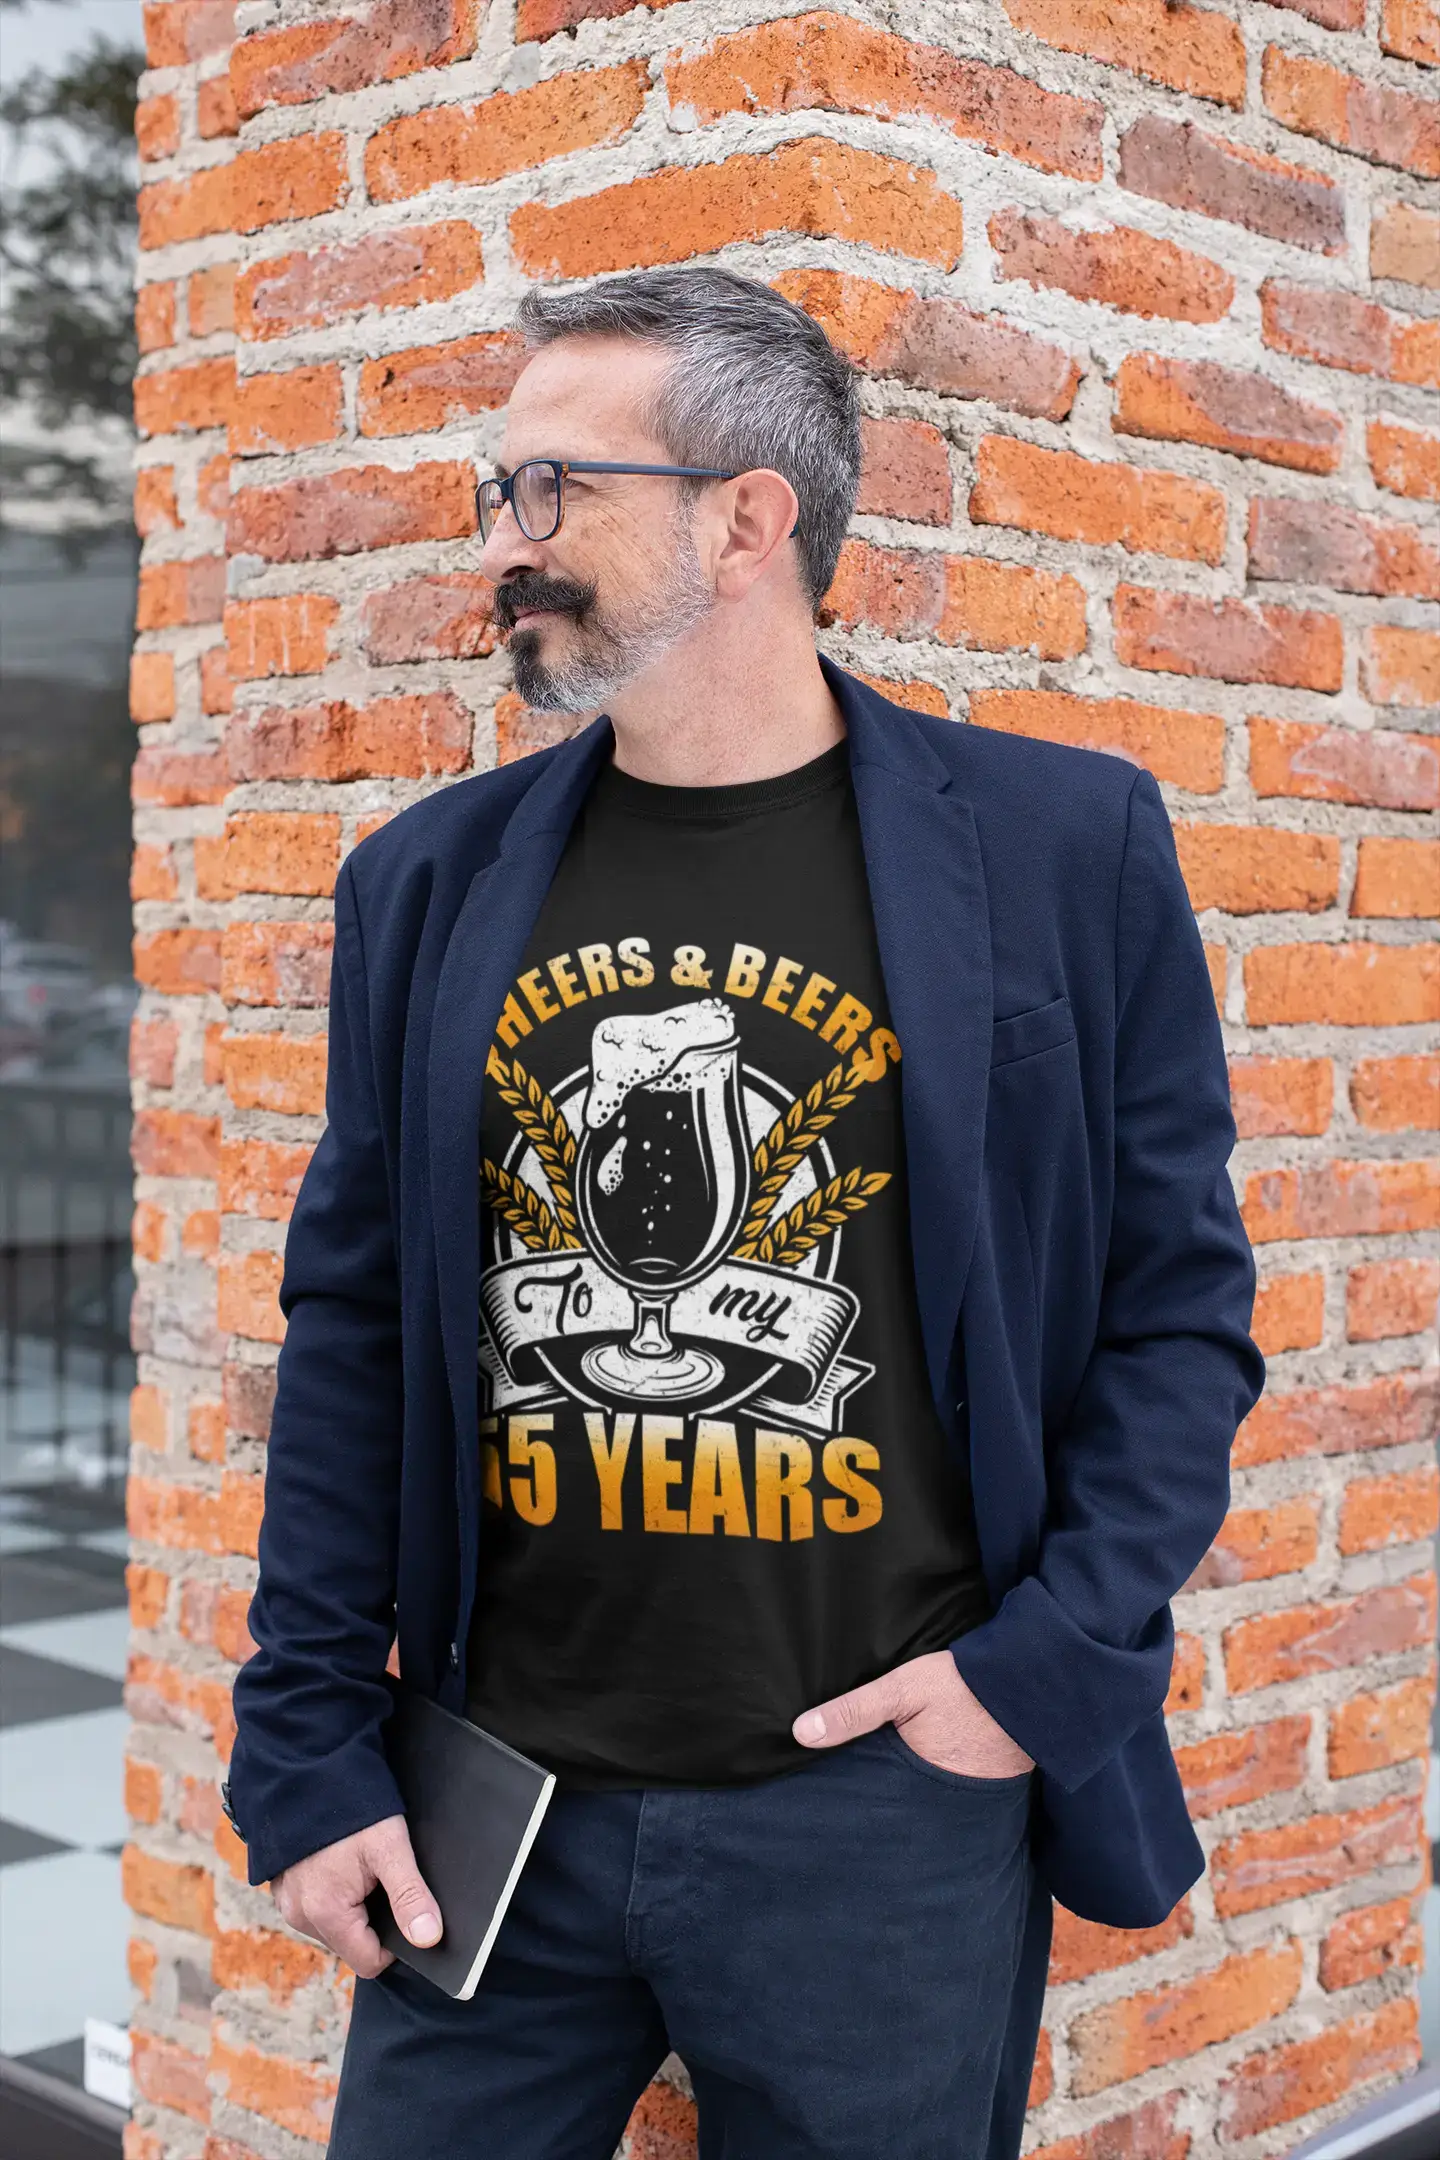 ULTRABASIC Men's T-Shirt Cheers and Beers To My 55 Years - Beer Lover Birthday Tee Shirt